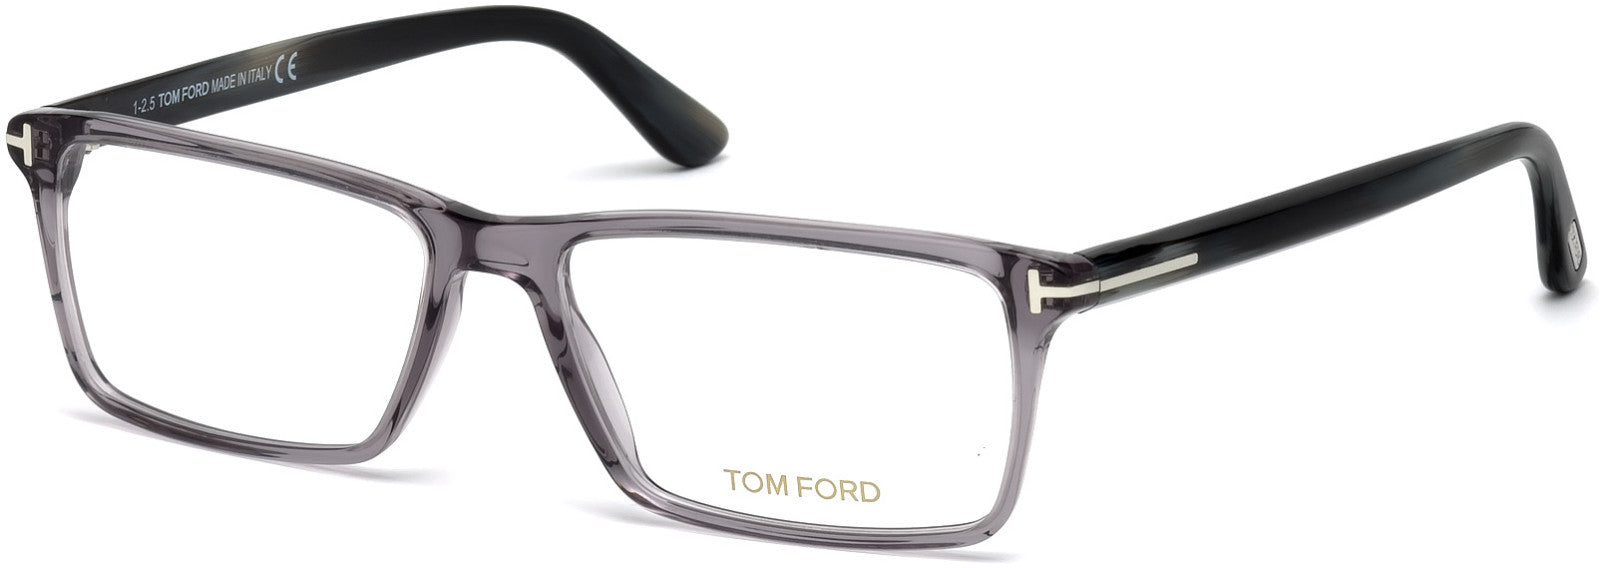 Tom Ford FT5408 Geometric Eyeglasses 020-020 - Transp. Grey, Grey Horn Effect Temples, Shiny Palladium "t" Logo